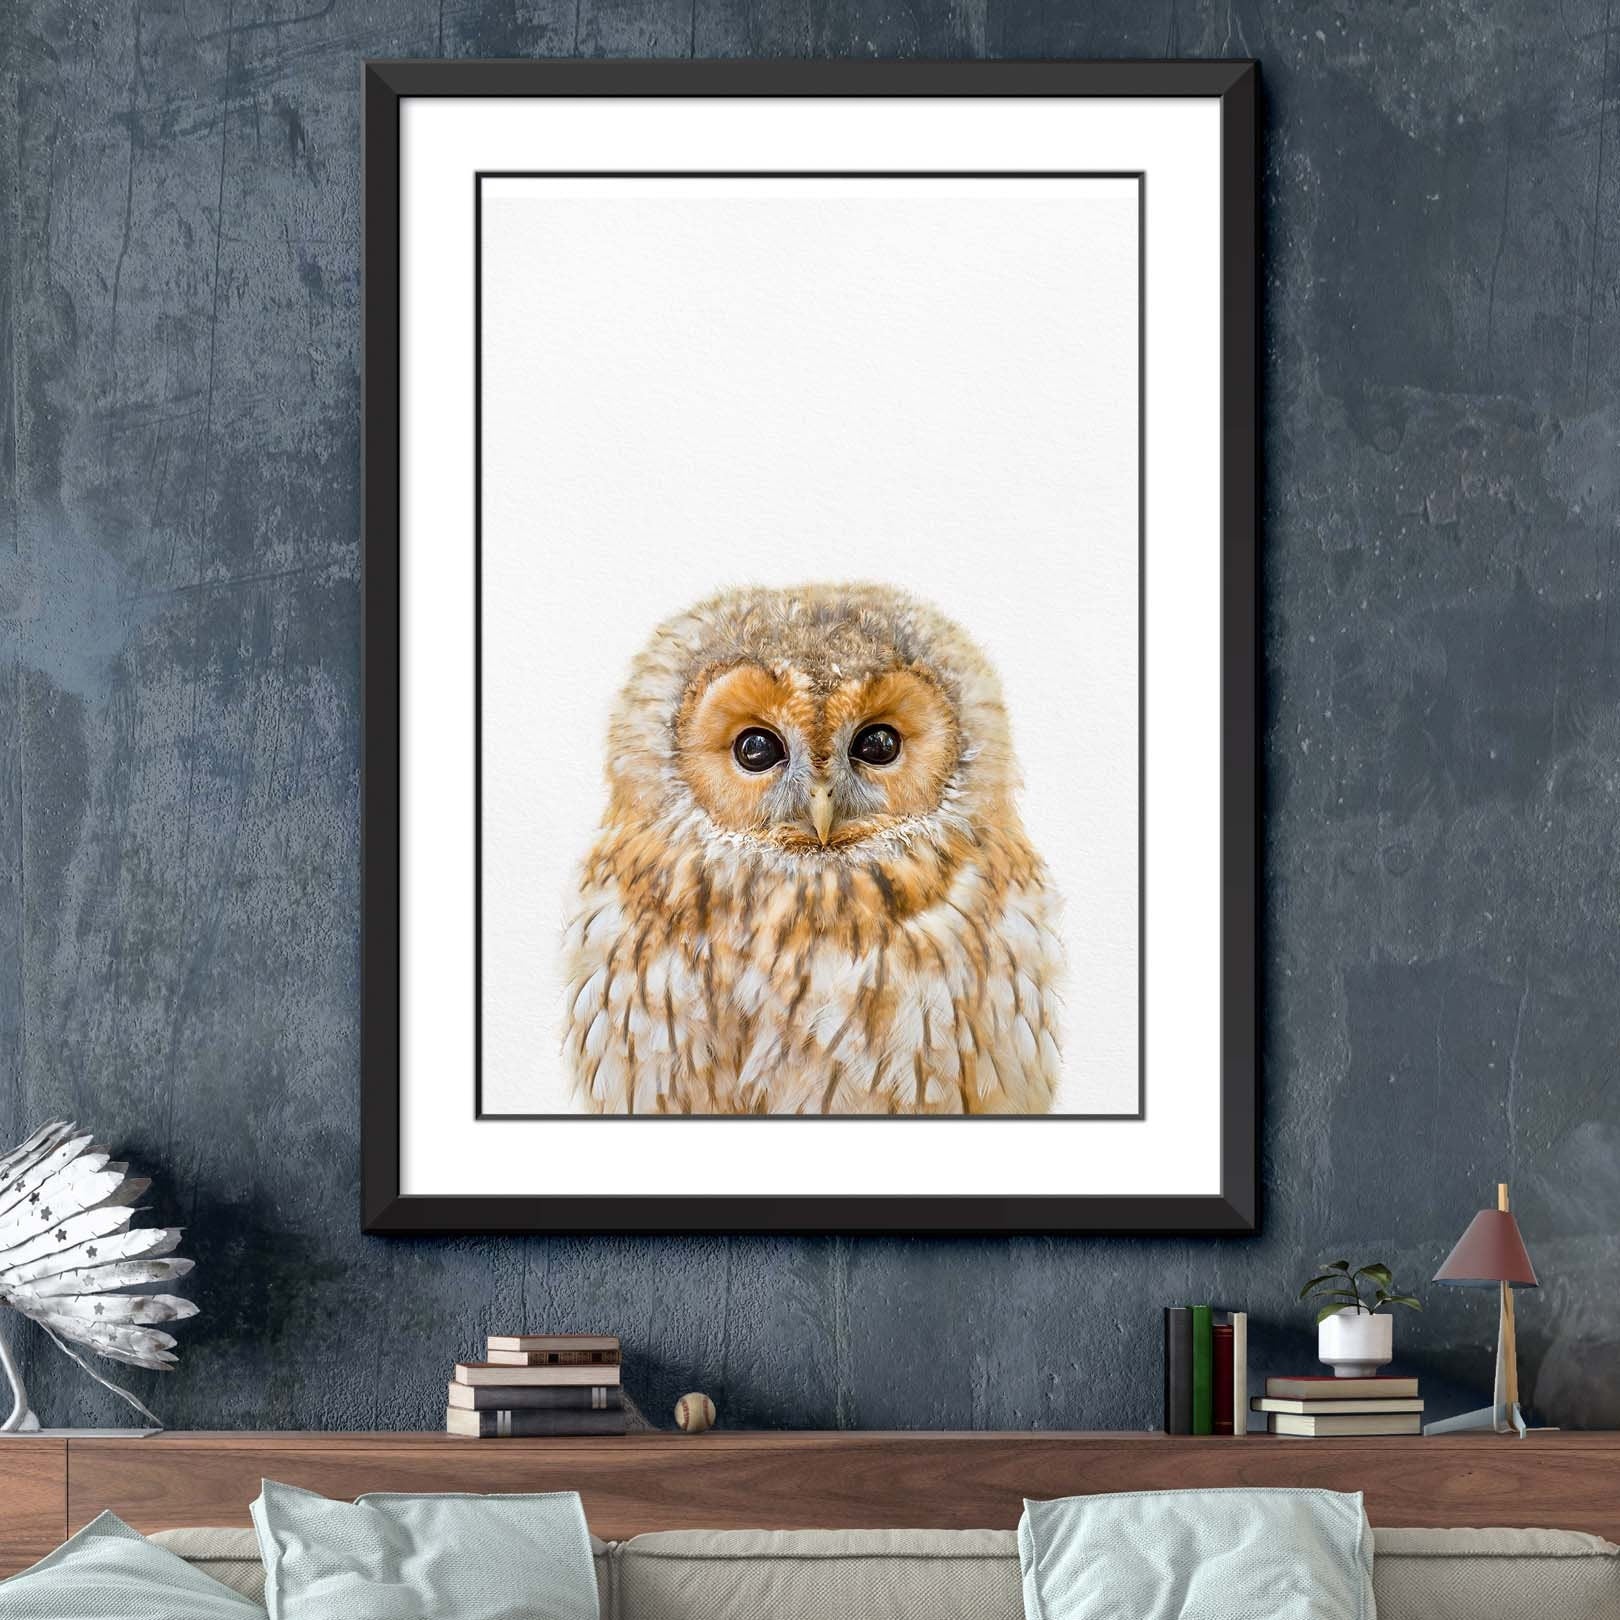 Owl Print, Owl Wall Art, Owl Decor, Living Room Art, Farmhouse Wall Decor, Farmhouse Art, Animal Wall Decor, Owl Home Decor